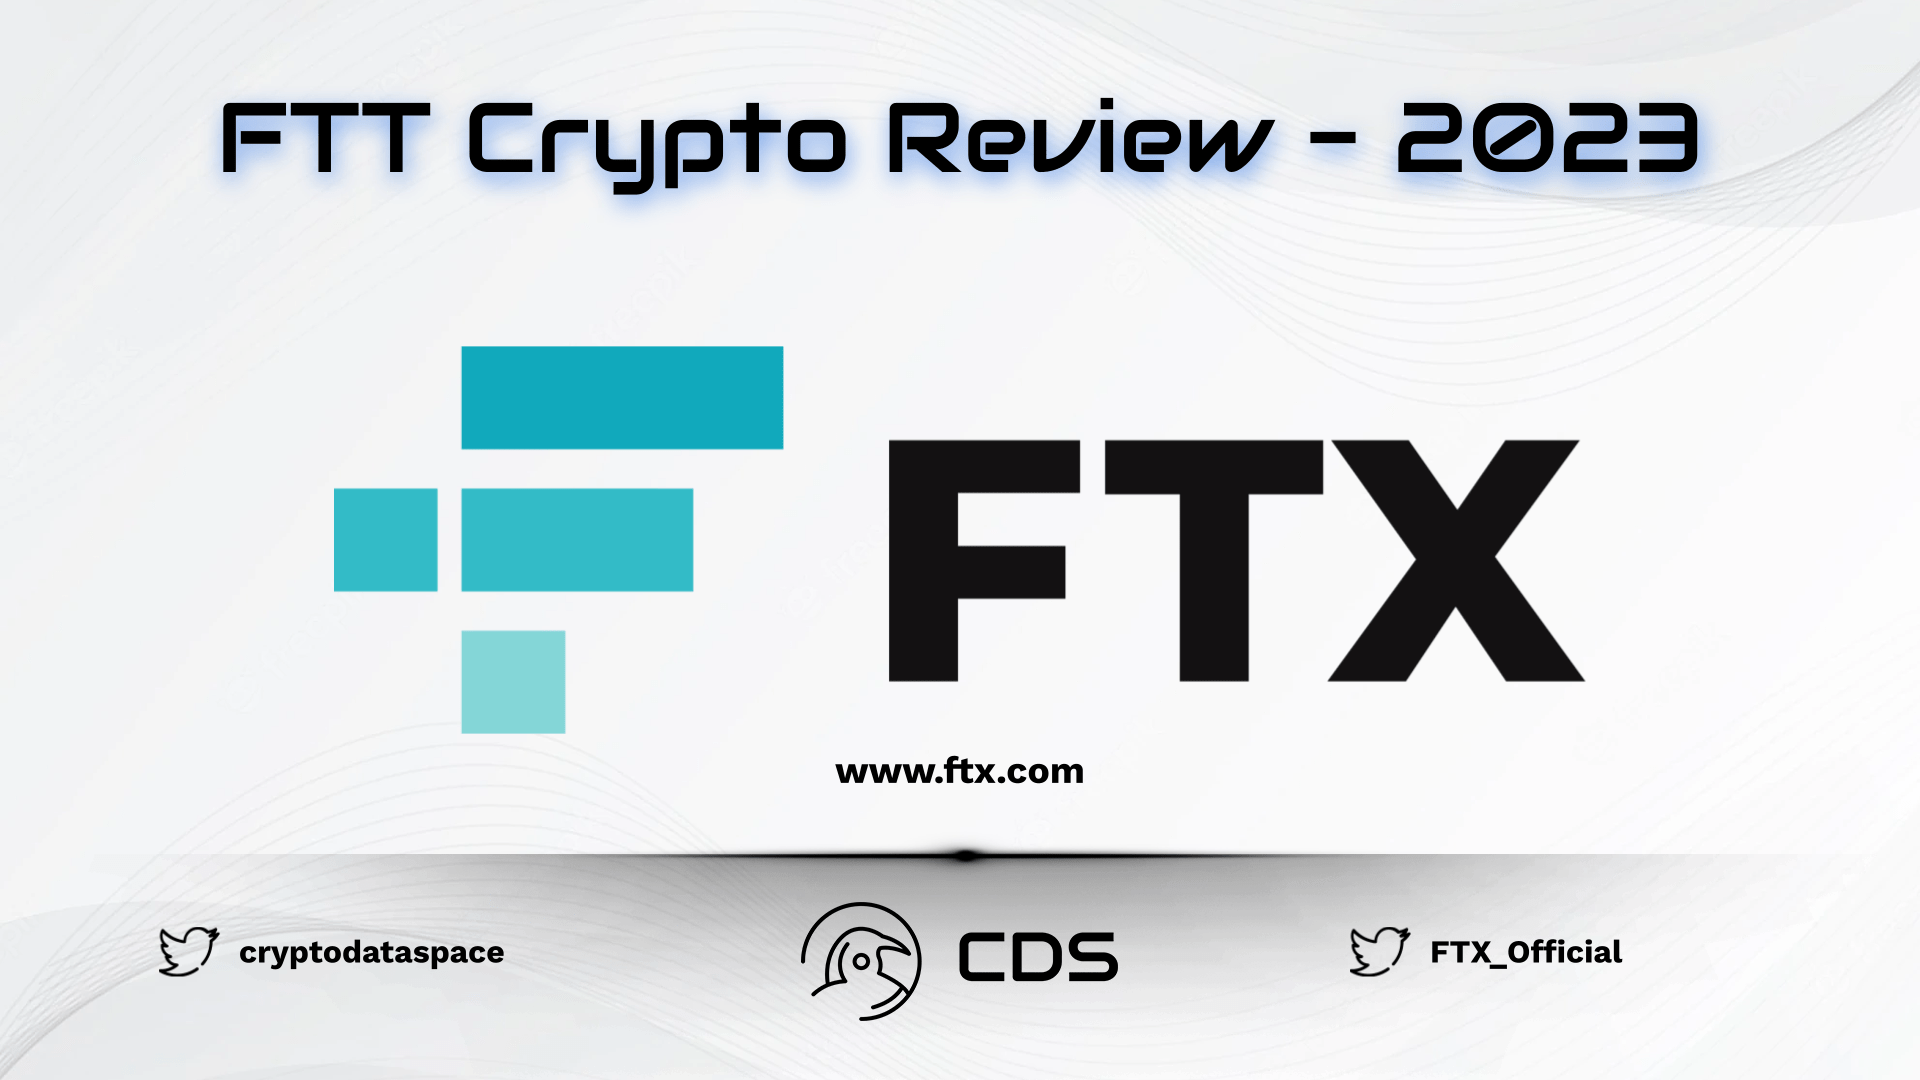 FTT Crypto Review - 2023